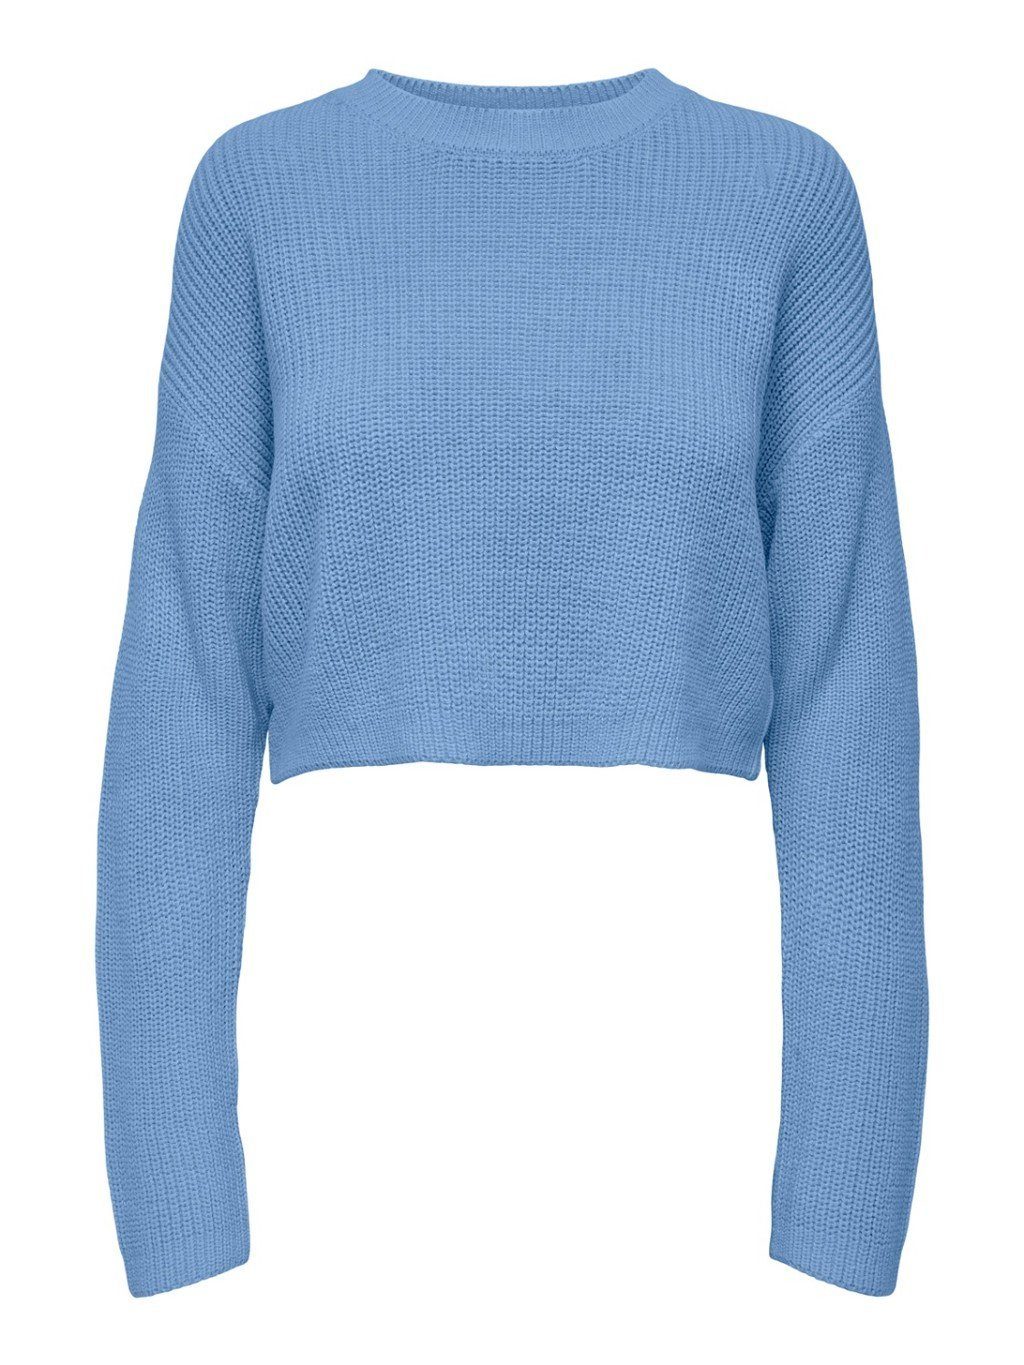 ONLY Pullover 4579 Sweater Cropped Strickpullover ONLMALAVI Blau Langarm Rippstrick in Kurzer